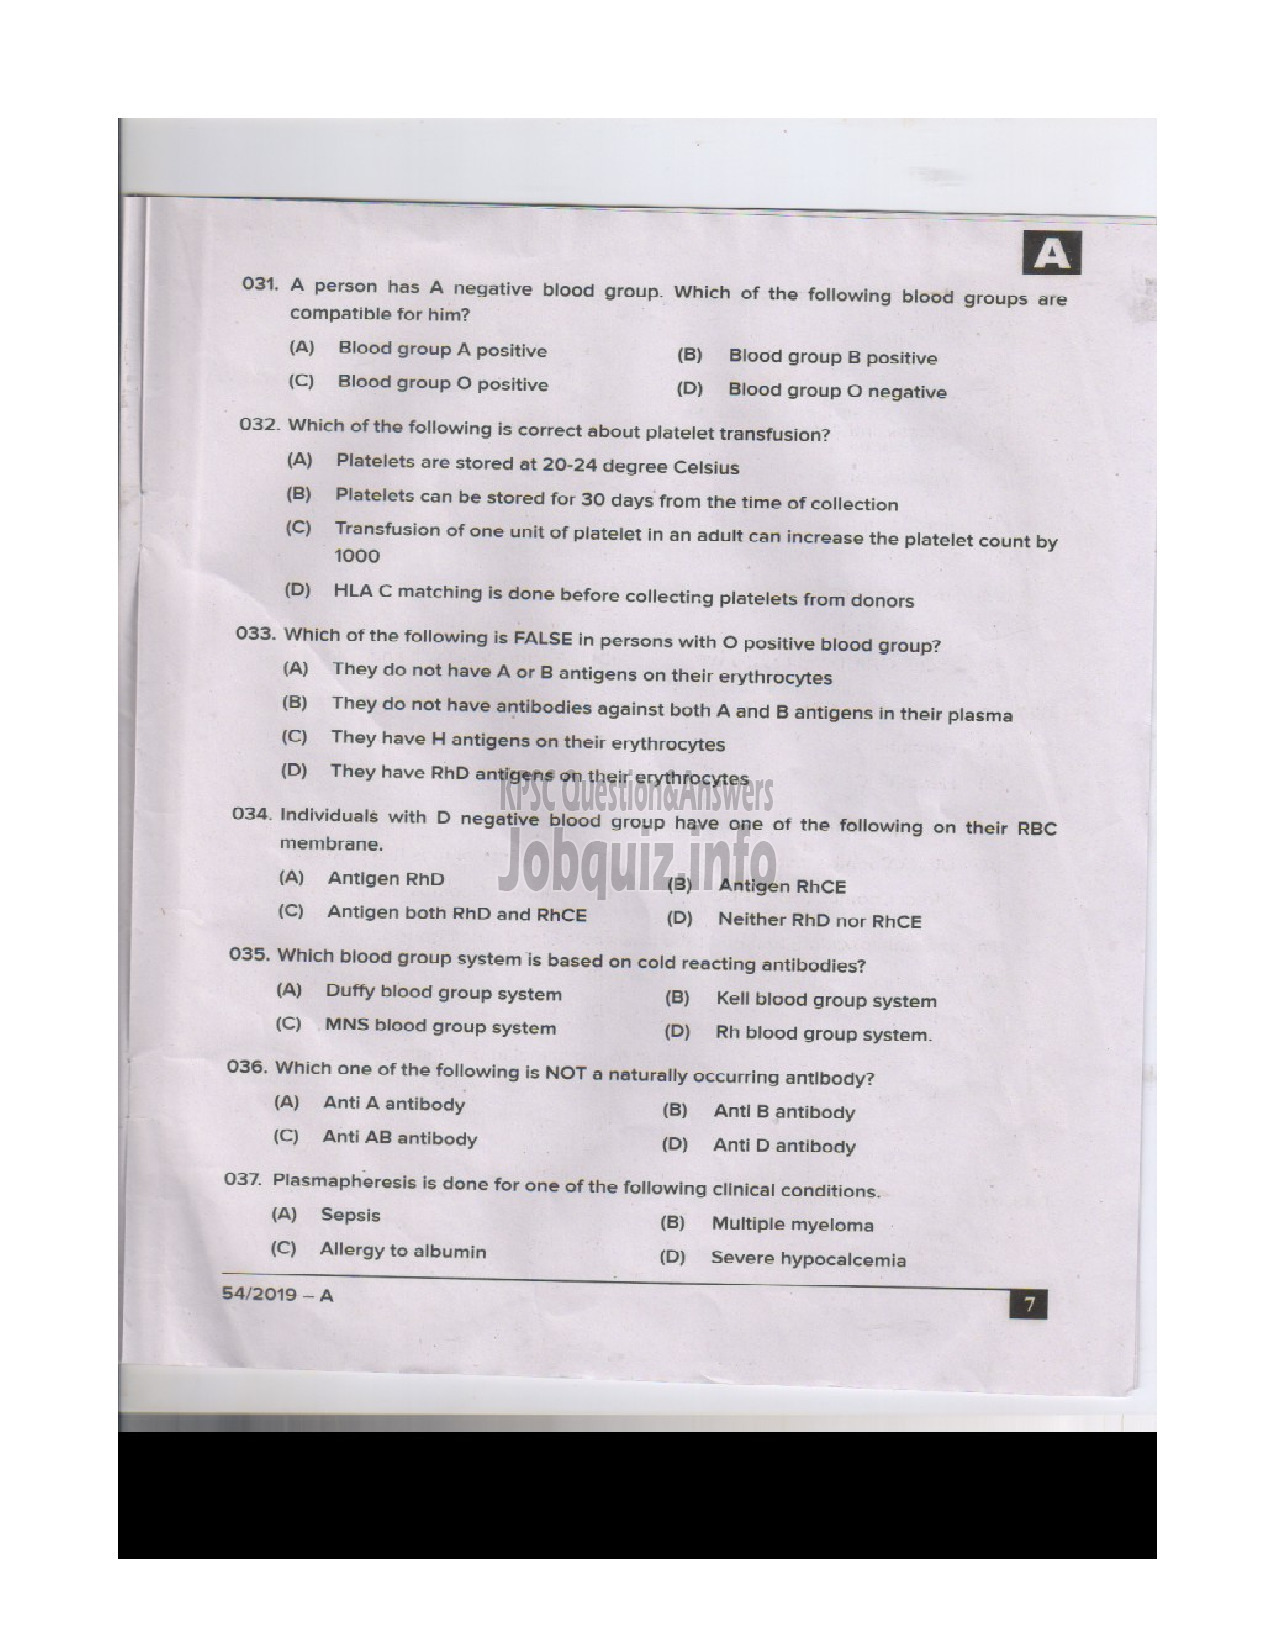 Kerala PSC Question Paper - BLOOD BANK TECHNICIAN HEALTH SERVICES ENGLISH -7